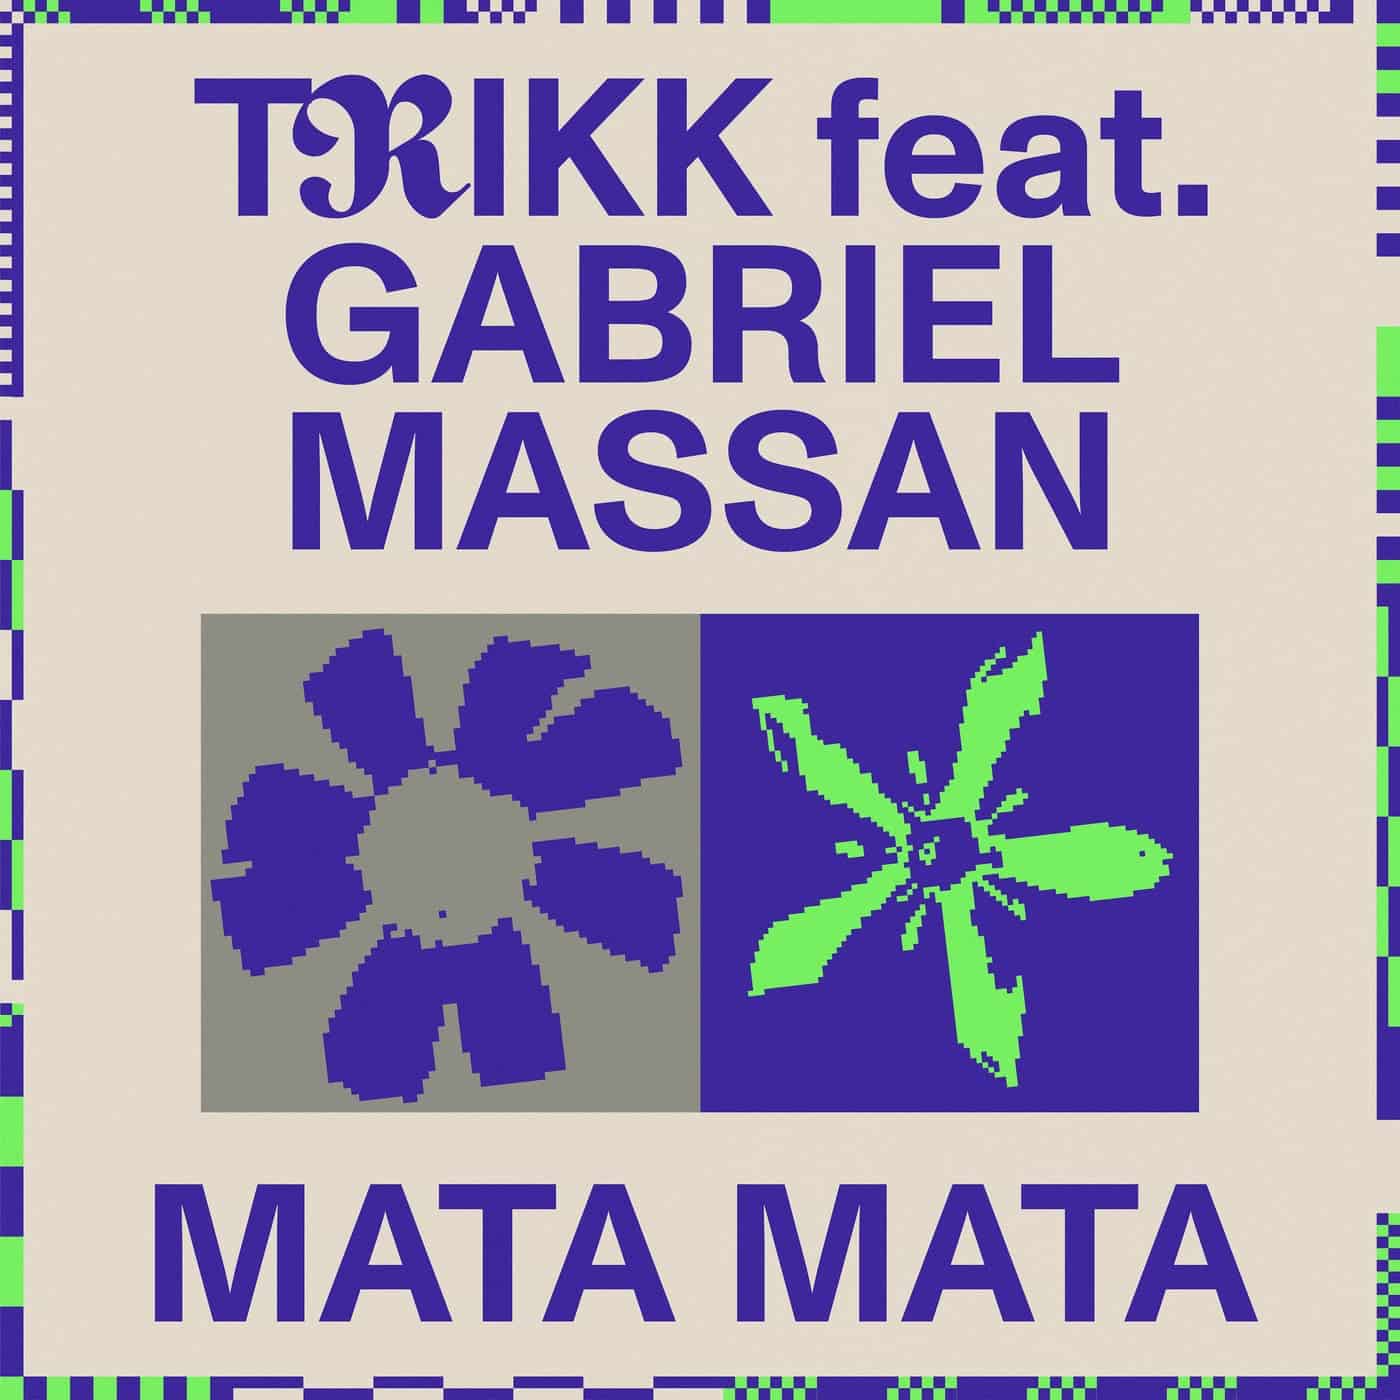 Download Trikk, Gabriel Massan - Mata Mata on Electrobuzz